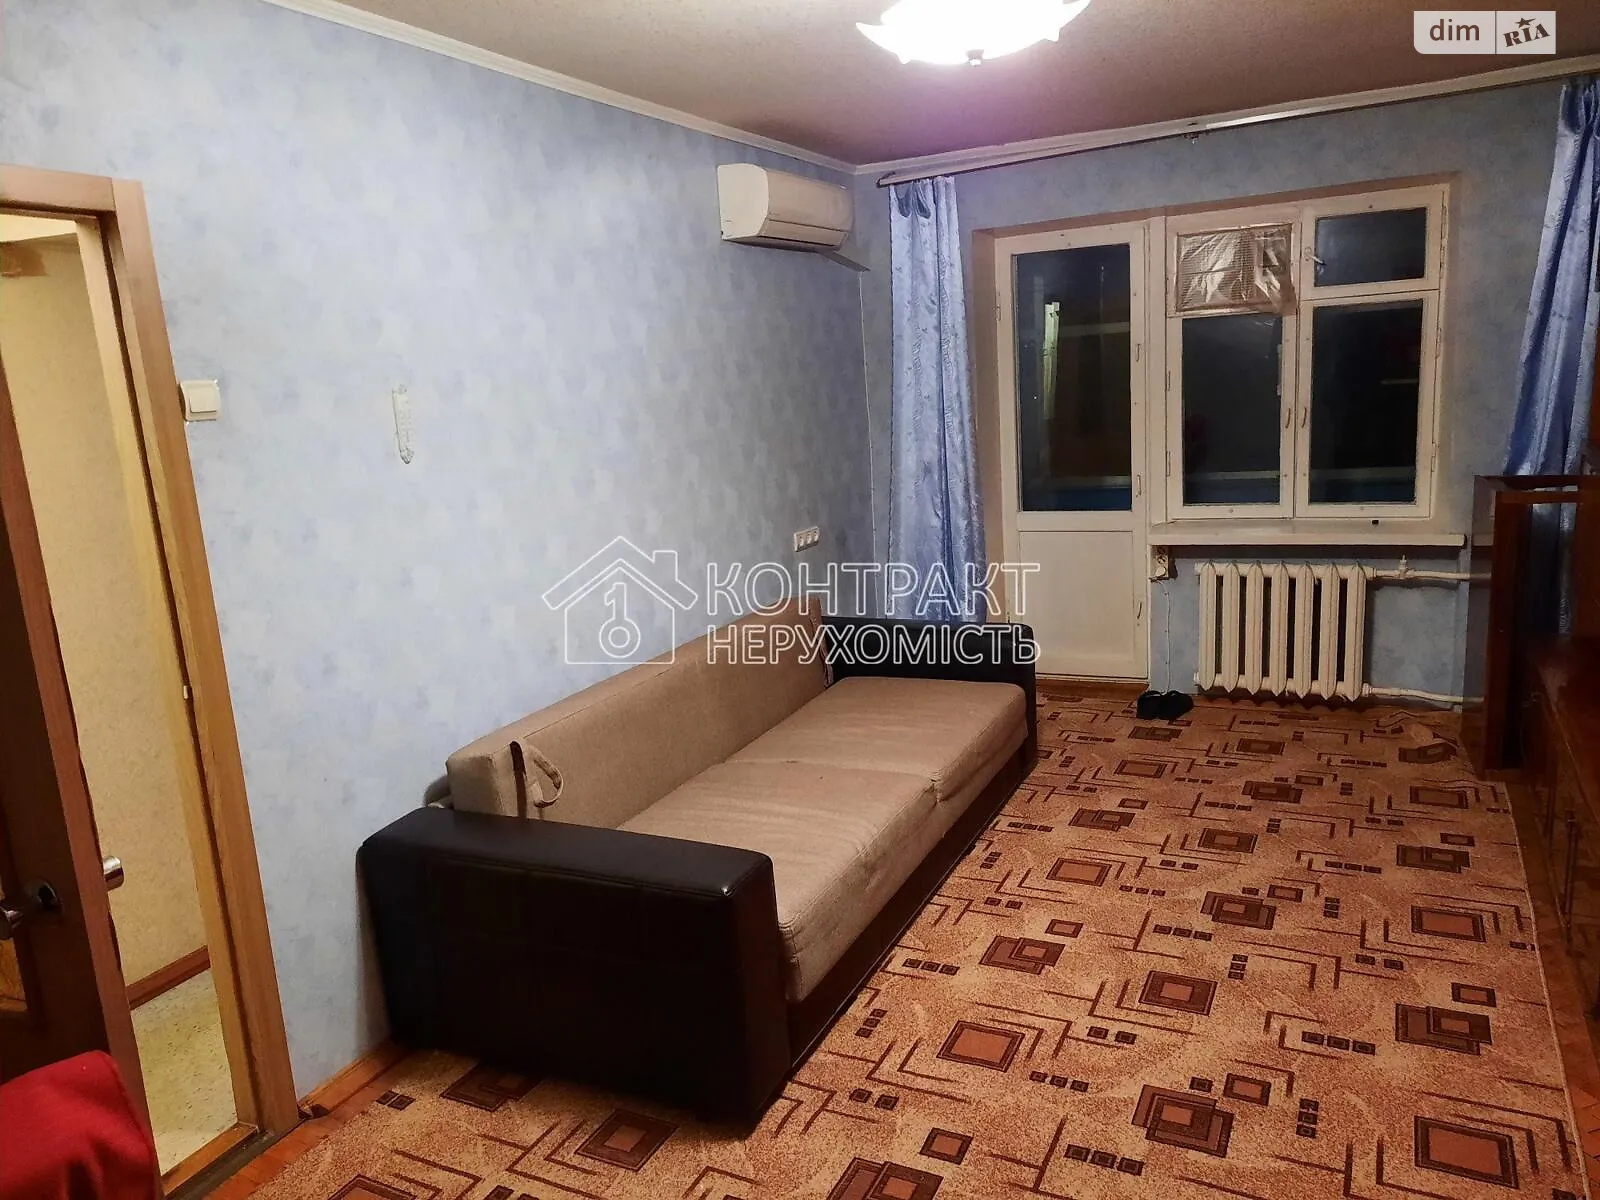 Сдается в аренду 1-комнатная квартира 39 кв. м в Харькове, ул. Отакара Яроша